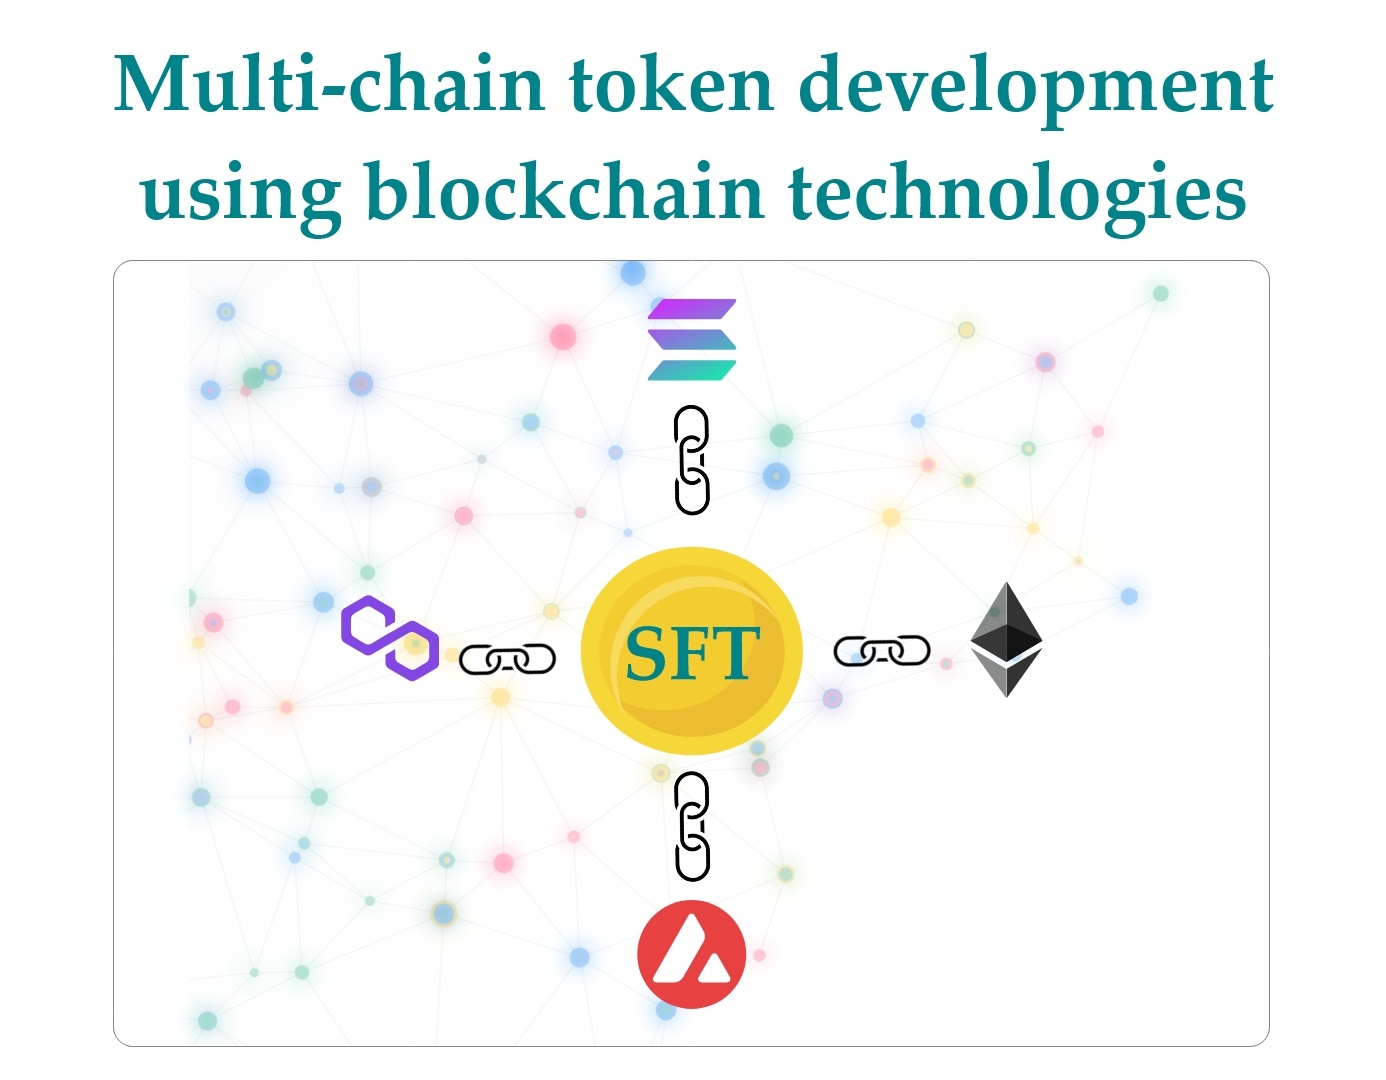 Interconnected chains representing multi-chain token development, showcasing blockchain technologies for enhanced decentralized transactions